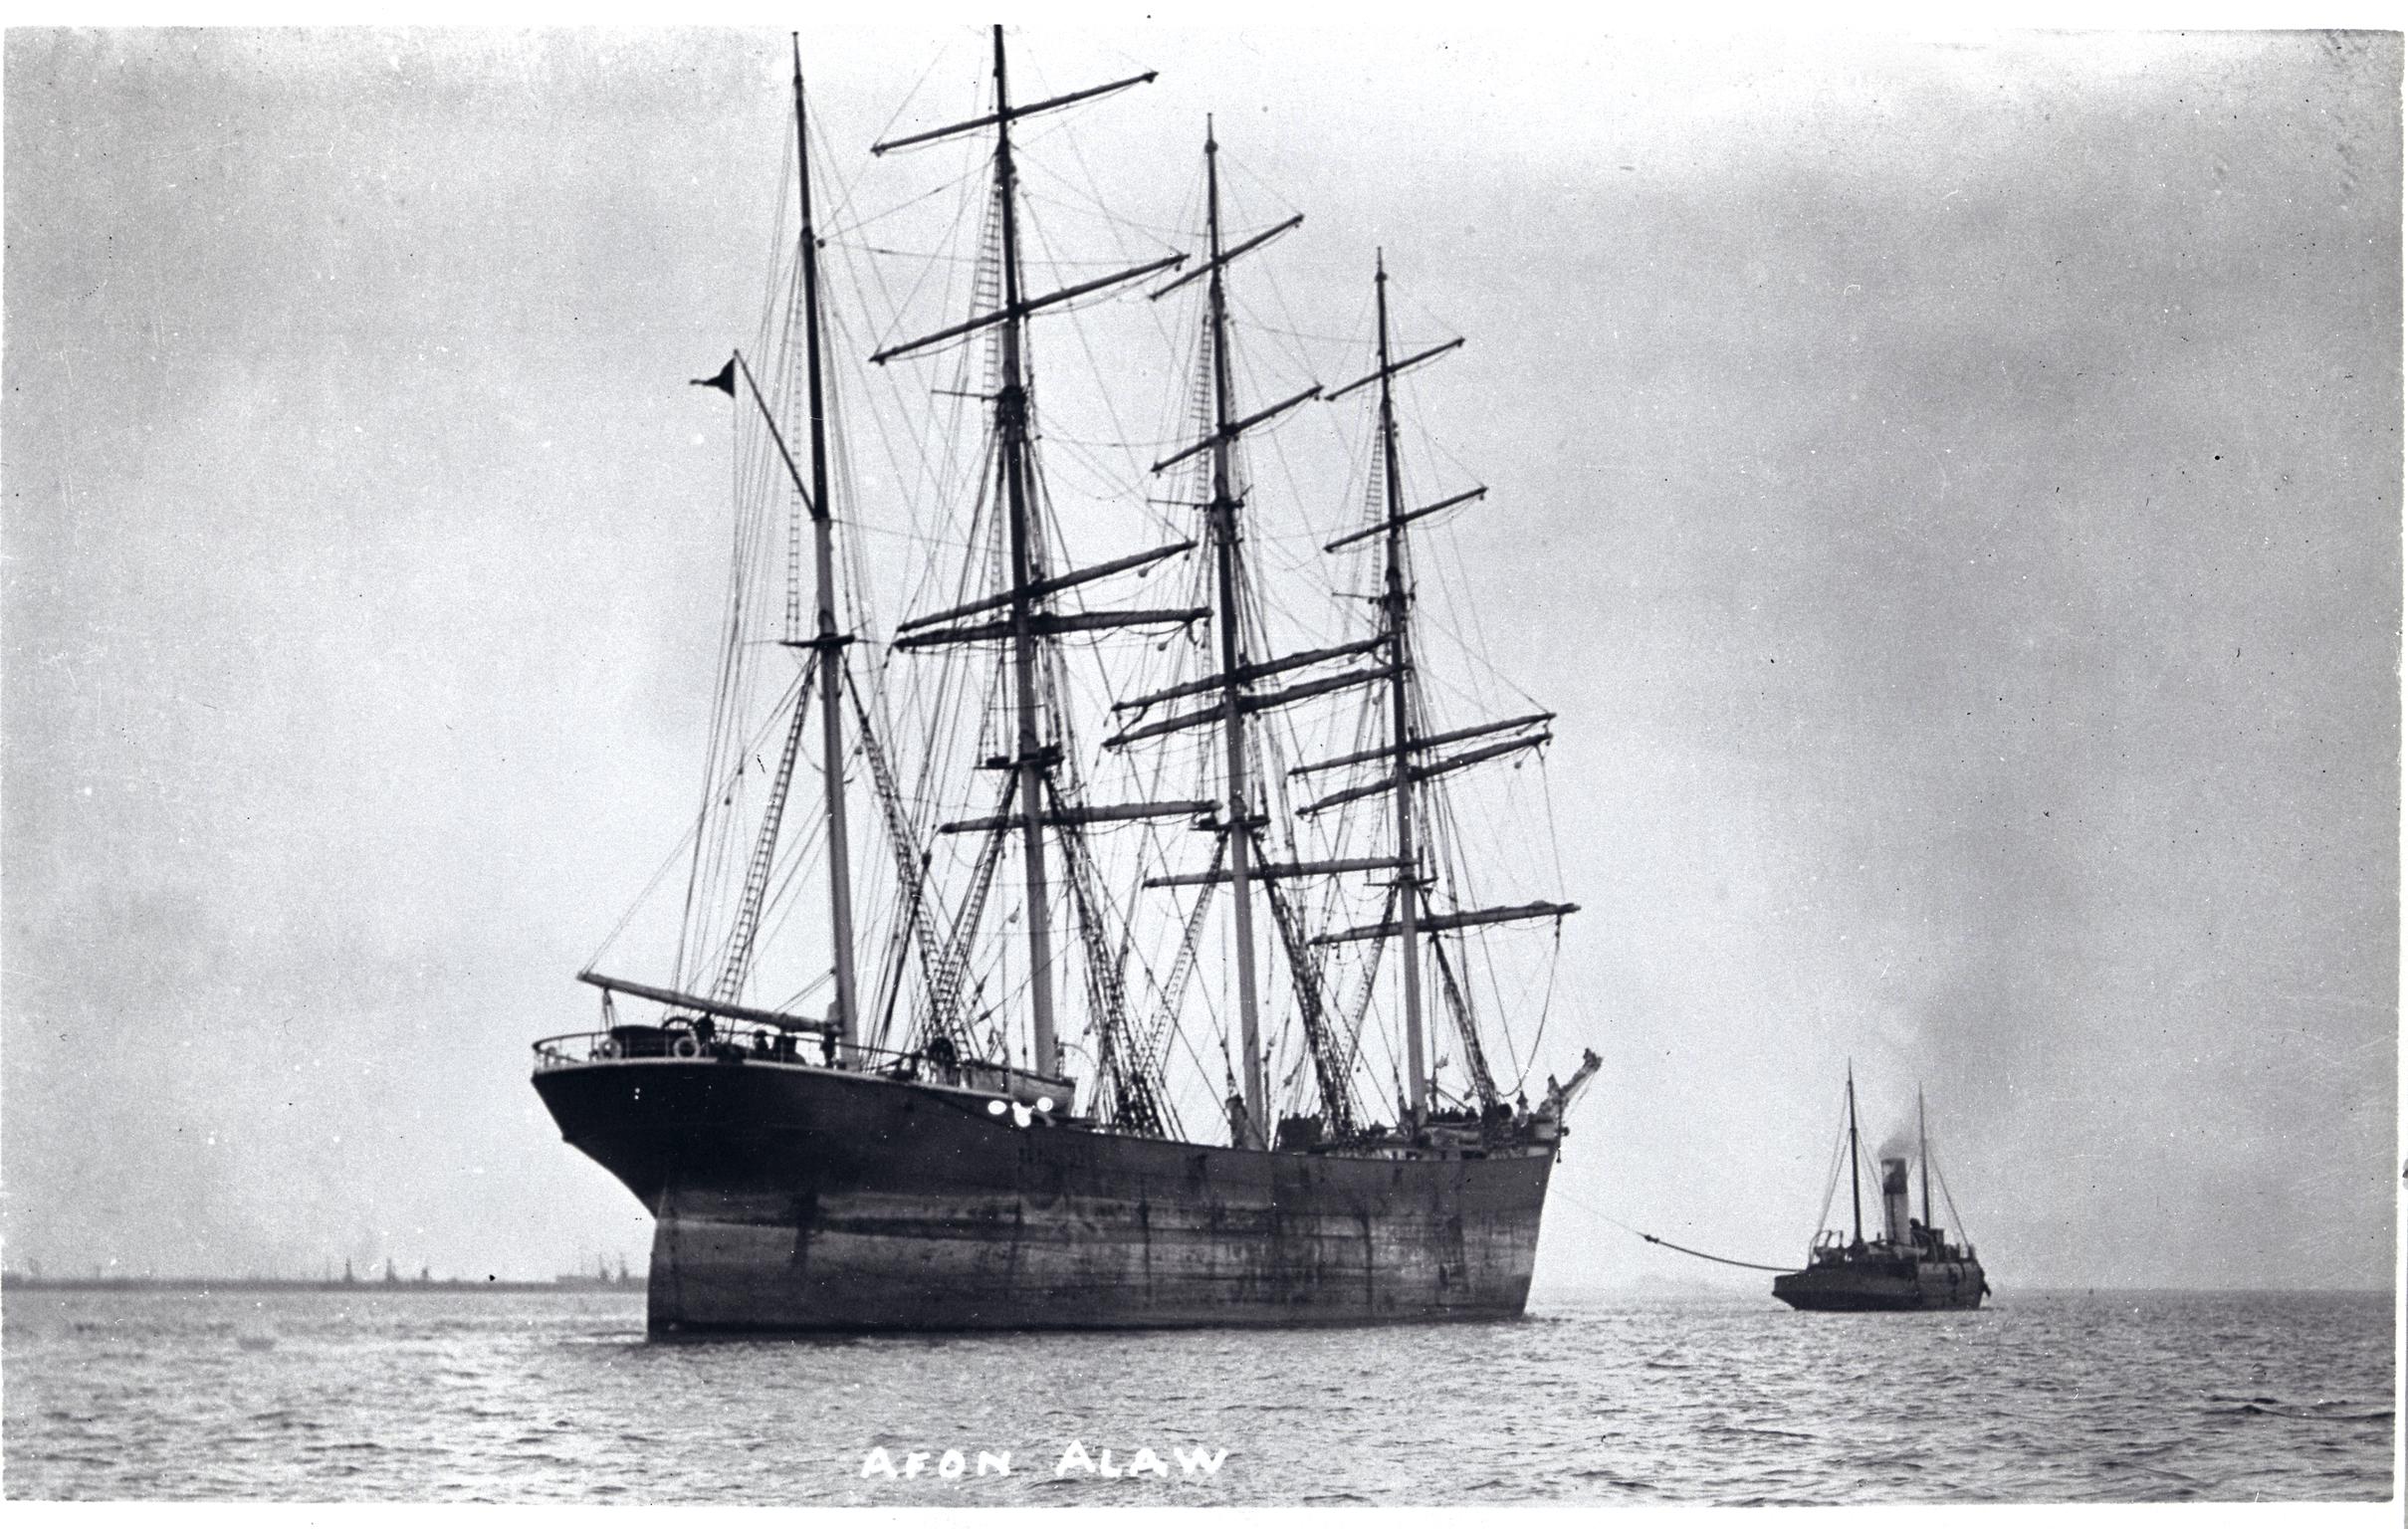 Album of postcards of sailing vessels